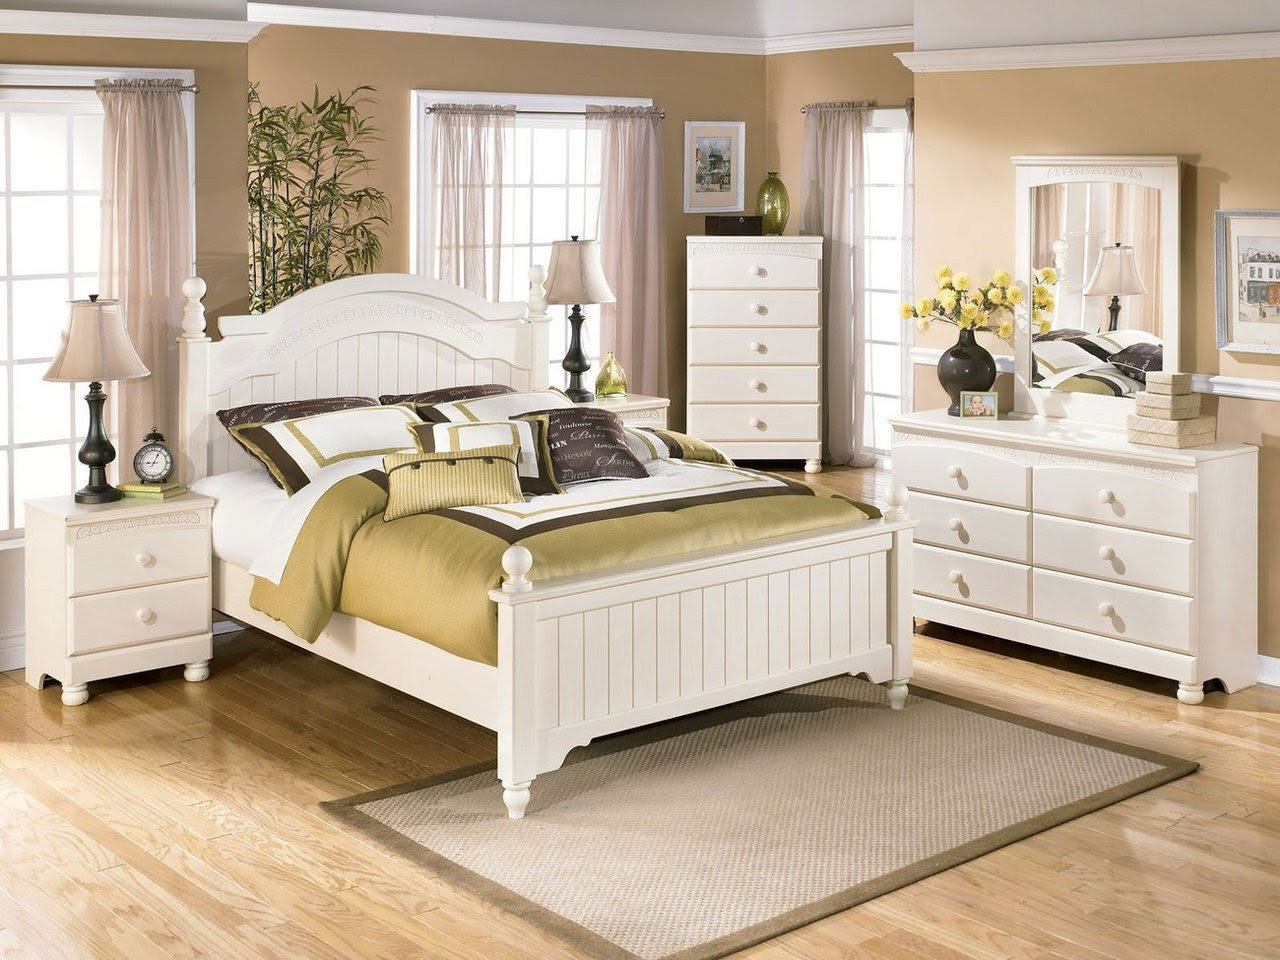 Cream Color Bedroom Set
 Cream Colored Bedroom Furniture Cream Color Bedroom Sets